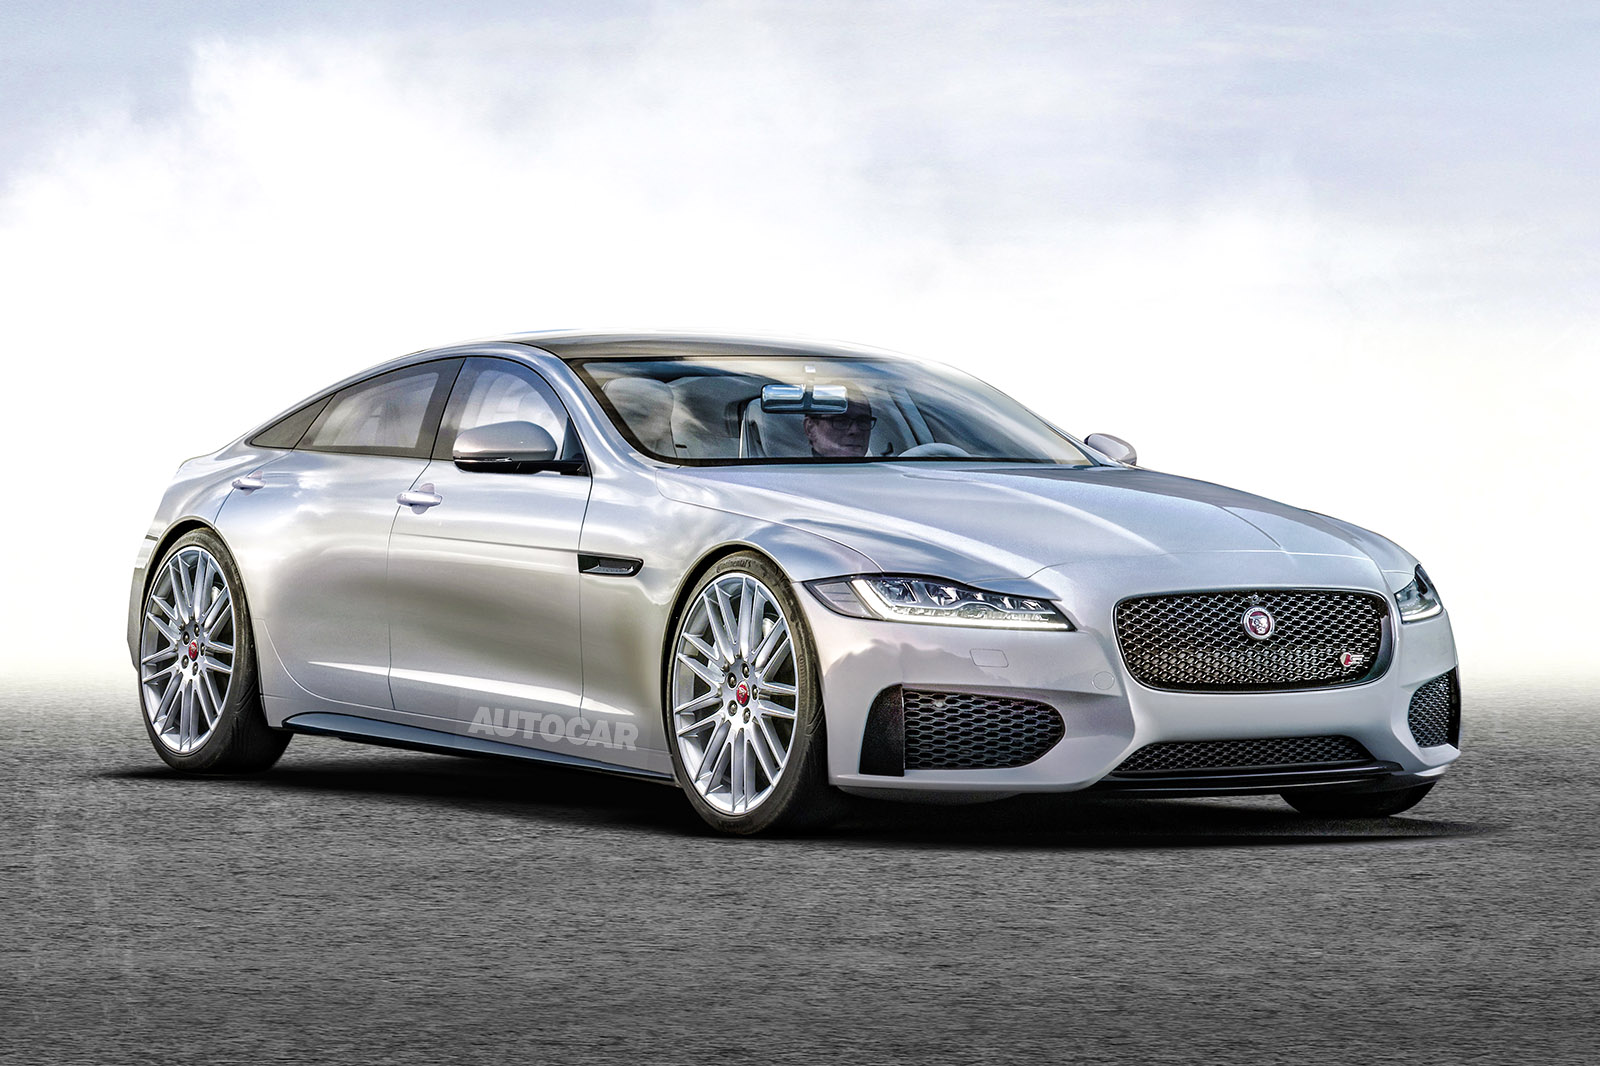 2019 Jaguar XJ: "Stunning outside, luxurious inside" - Ian Callum | Autocar